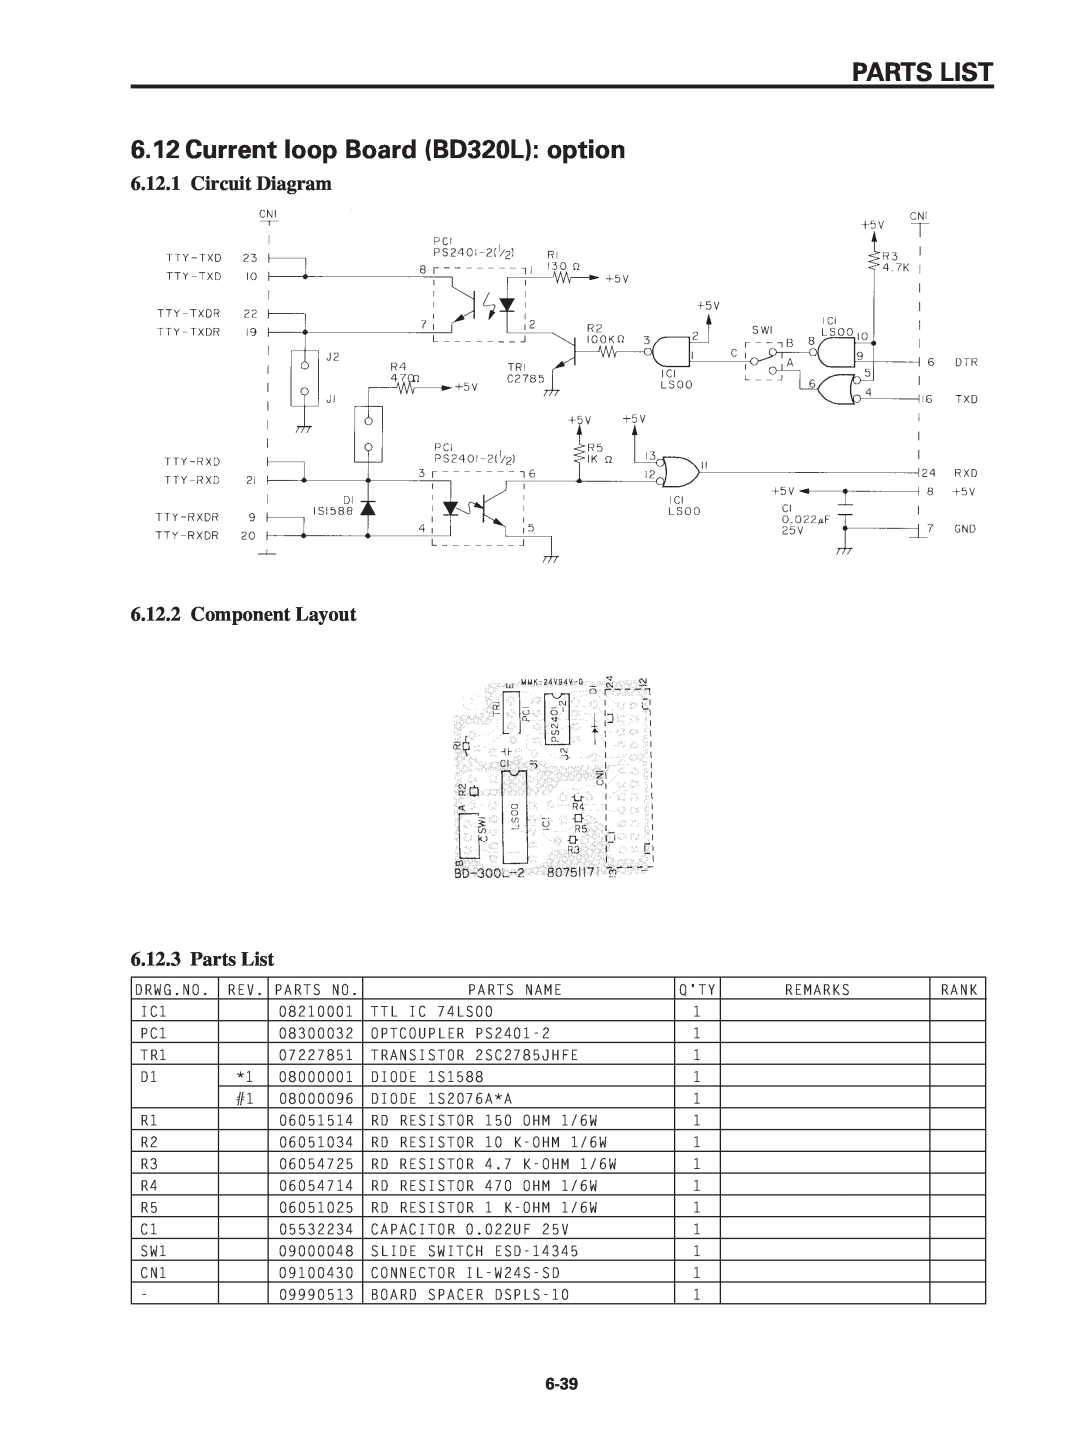 Star Micronics SP320S technical manual PARTS LIST 6.12 Current loop Board BD320L option 